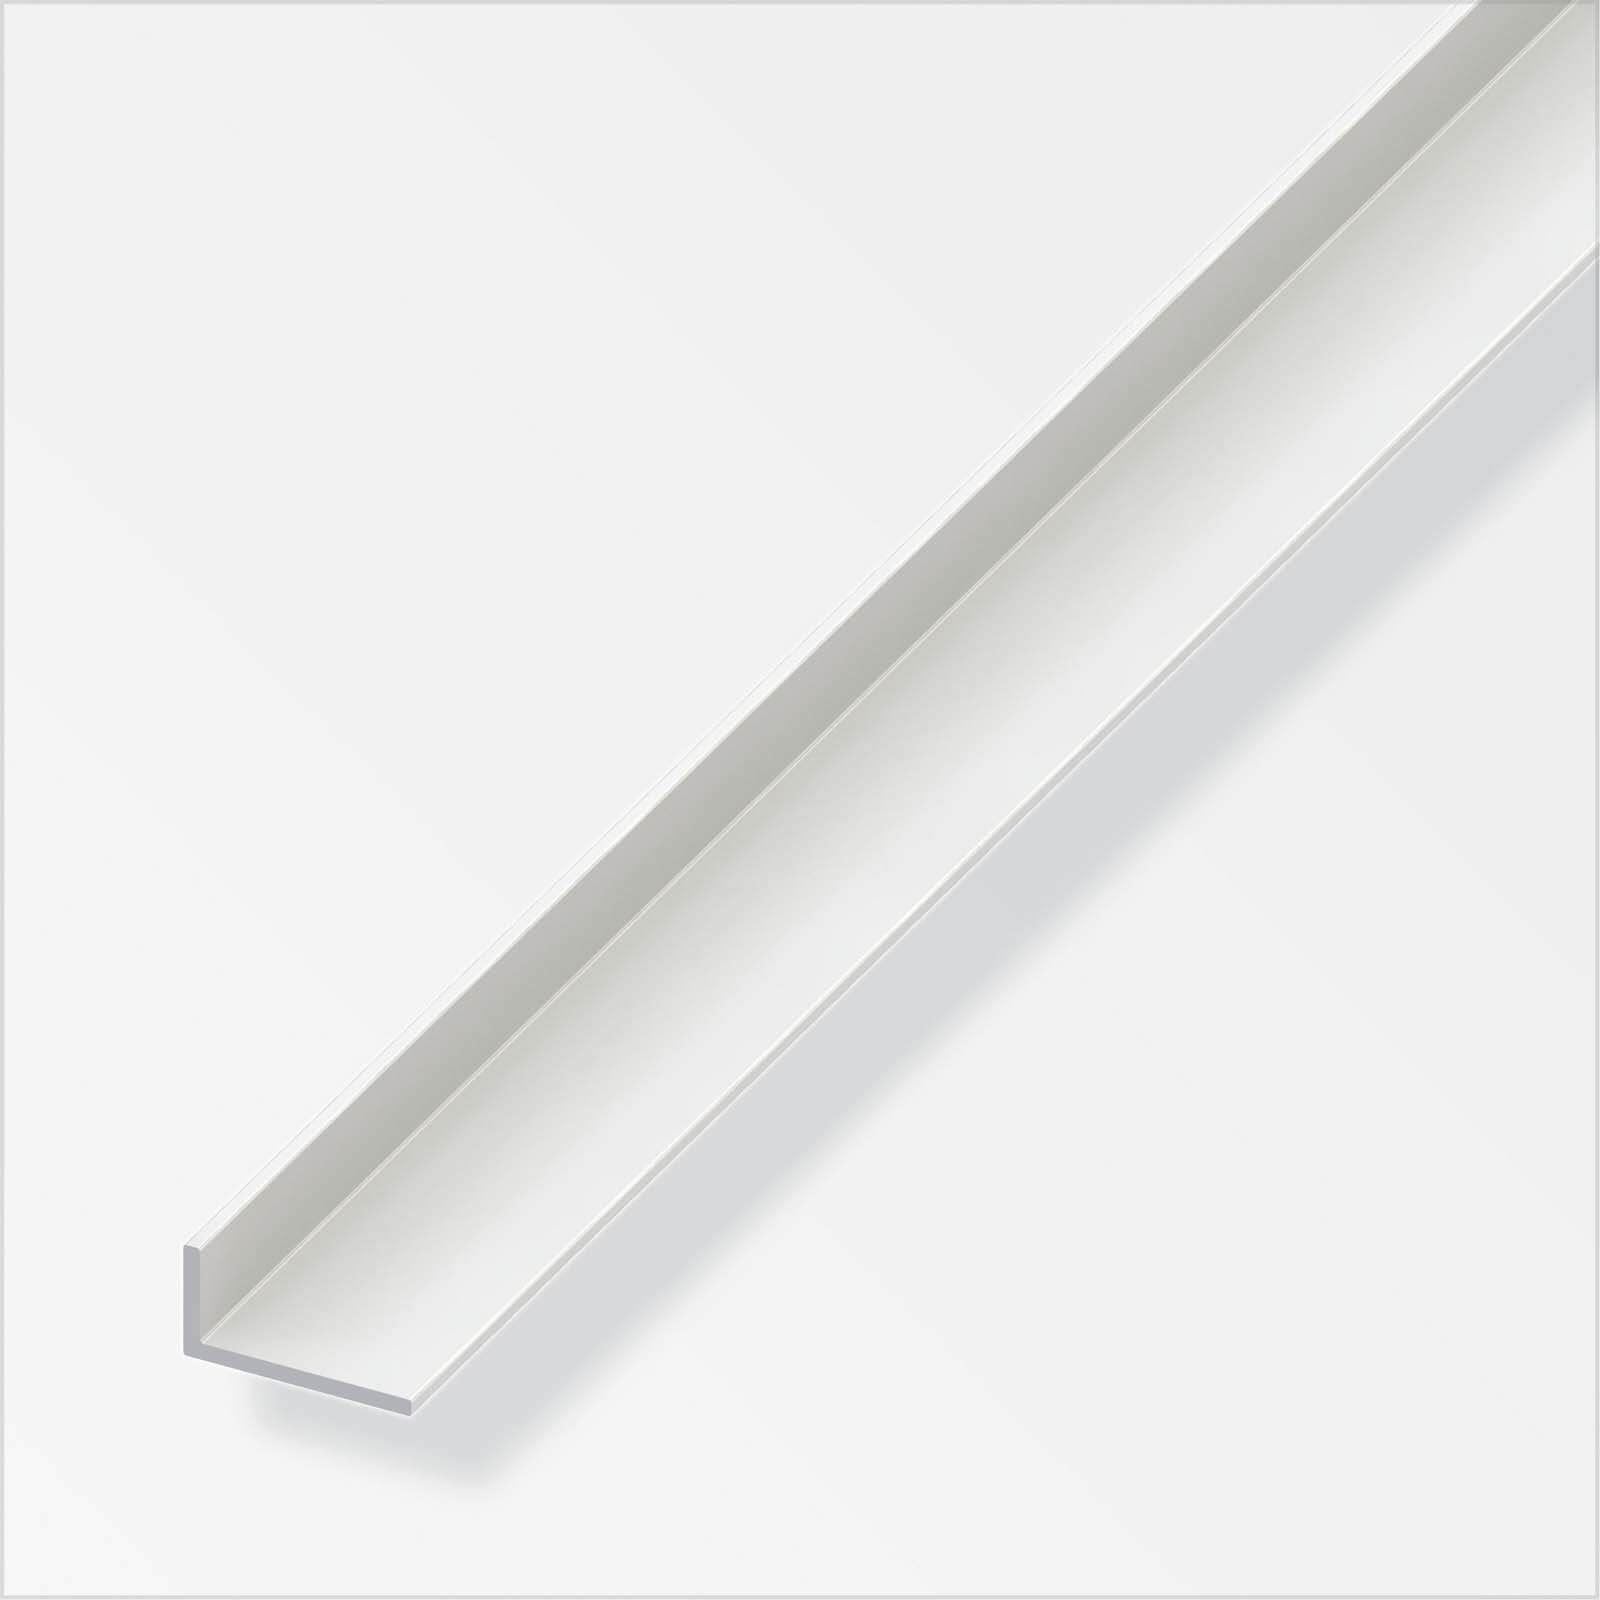 PVC Unequal Angle Profile - 1m x 40 x 10mm